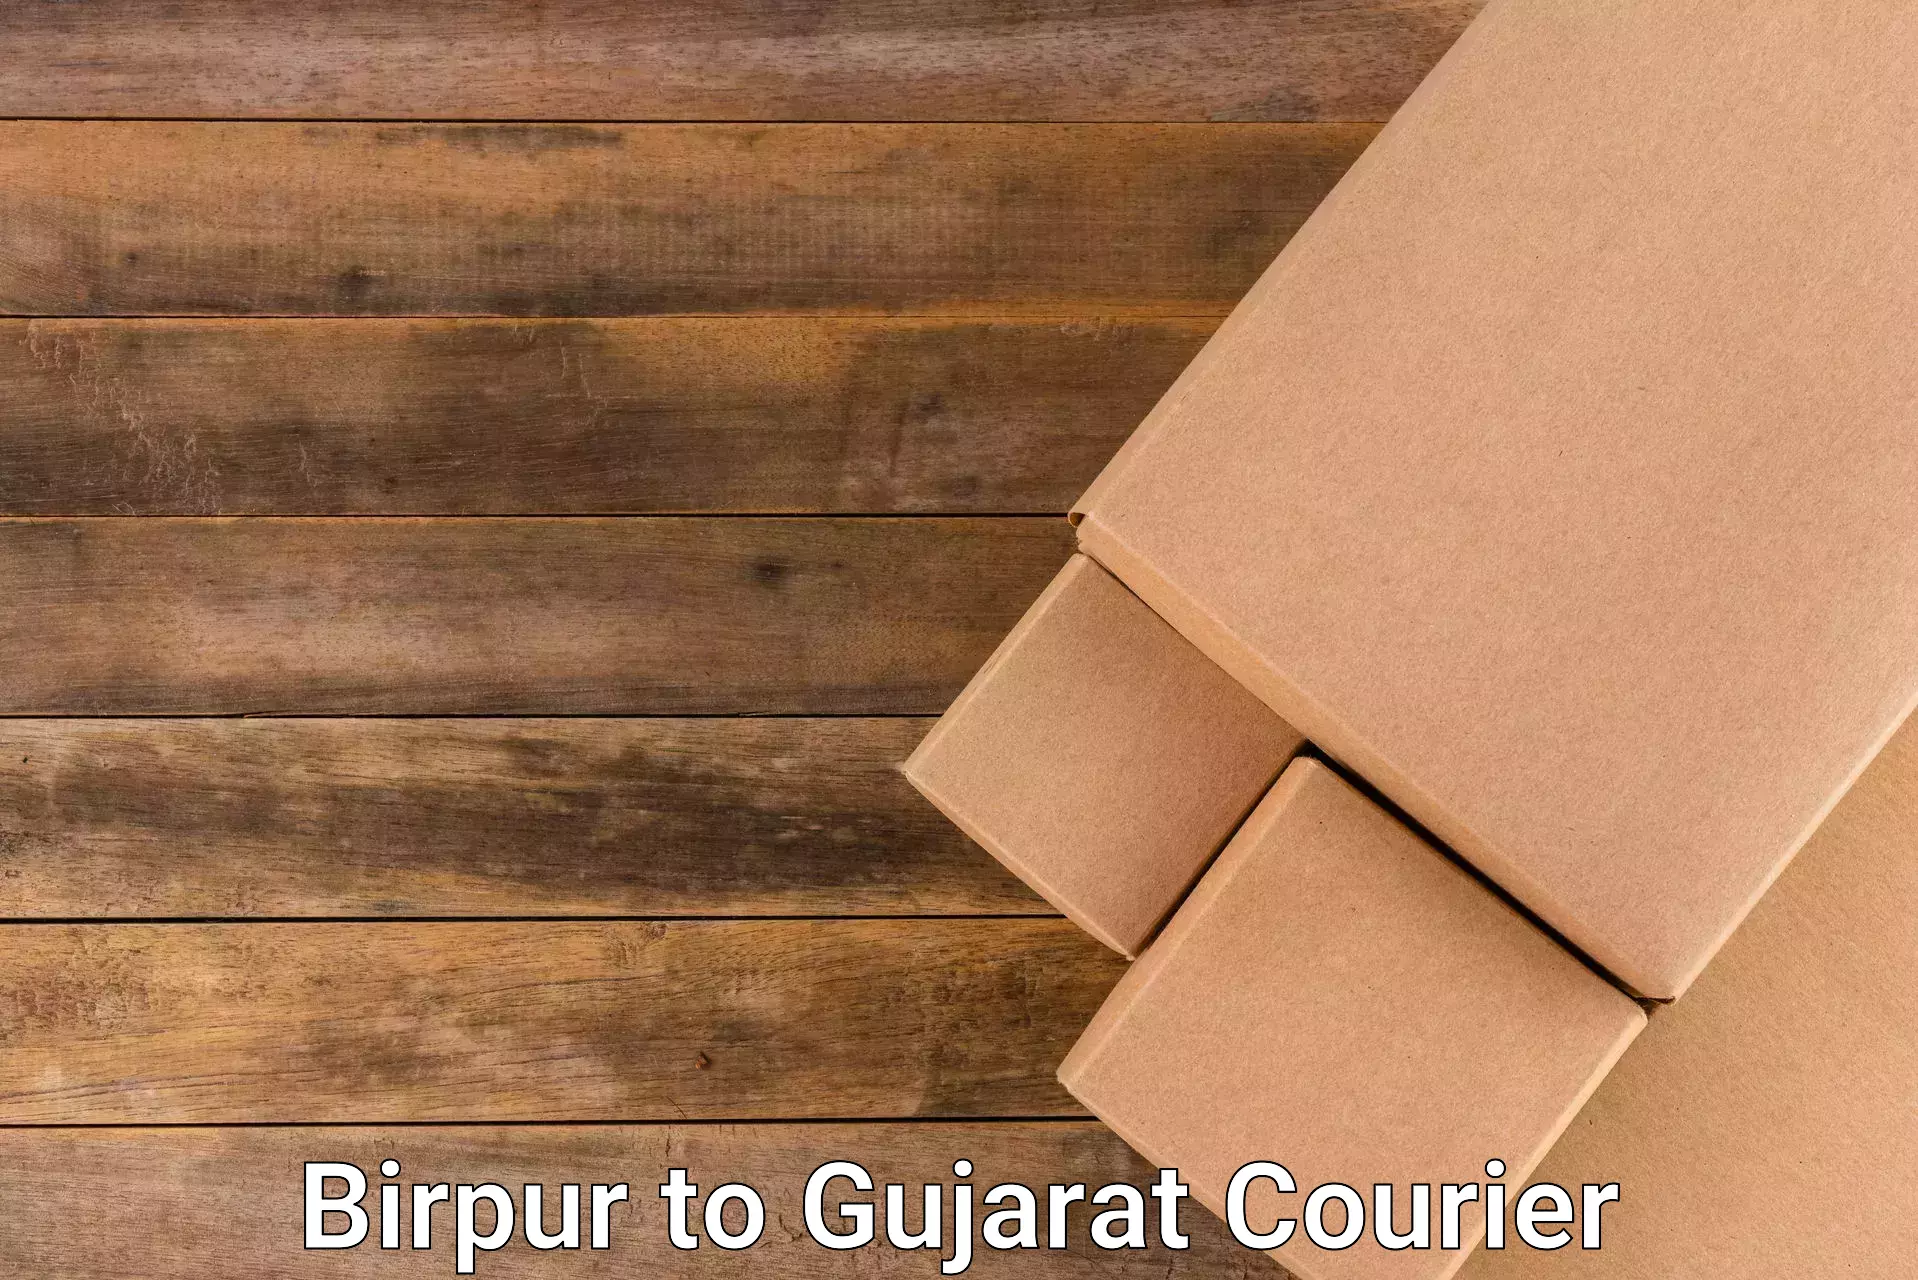 Courier service partnerships Birpur to Gujarat